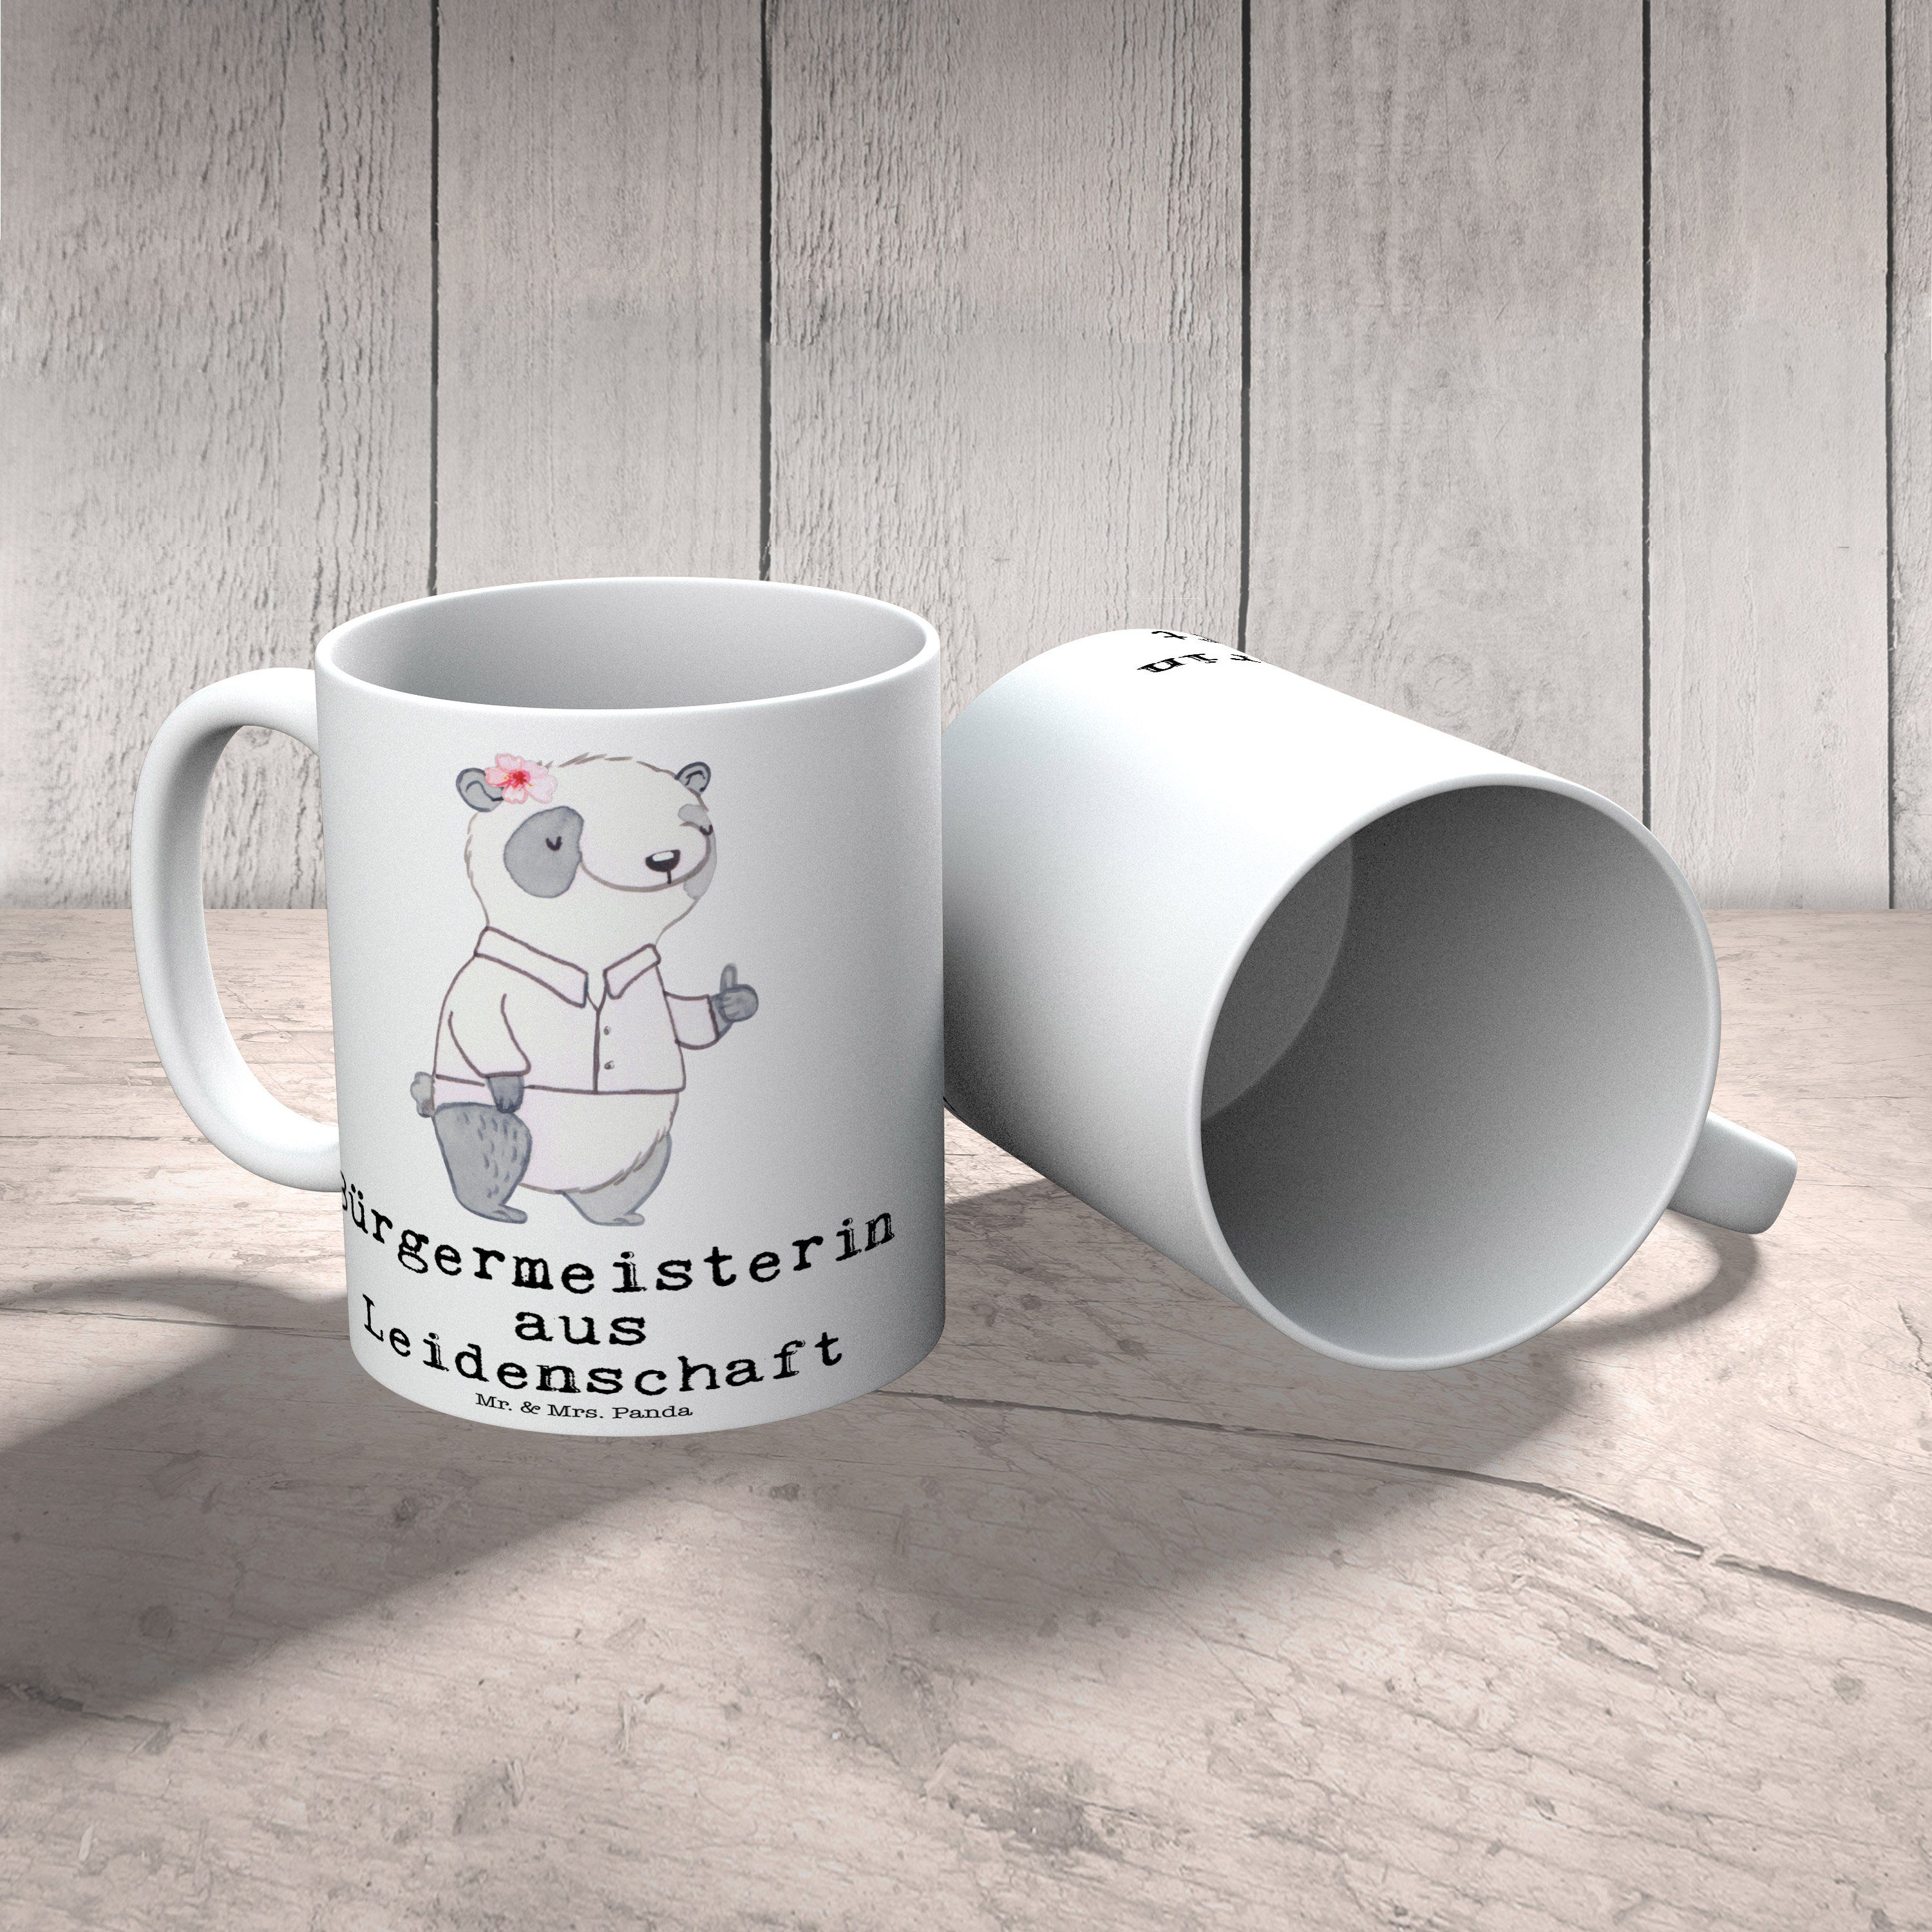 - aus Kaffeebecher, - Panda Keramik Weiß Mr. Mit, Leidenschaft Bürgermeisterin Mrs. & Geschenk, Tasse